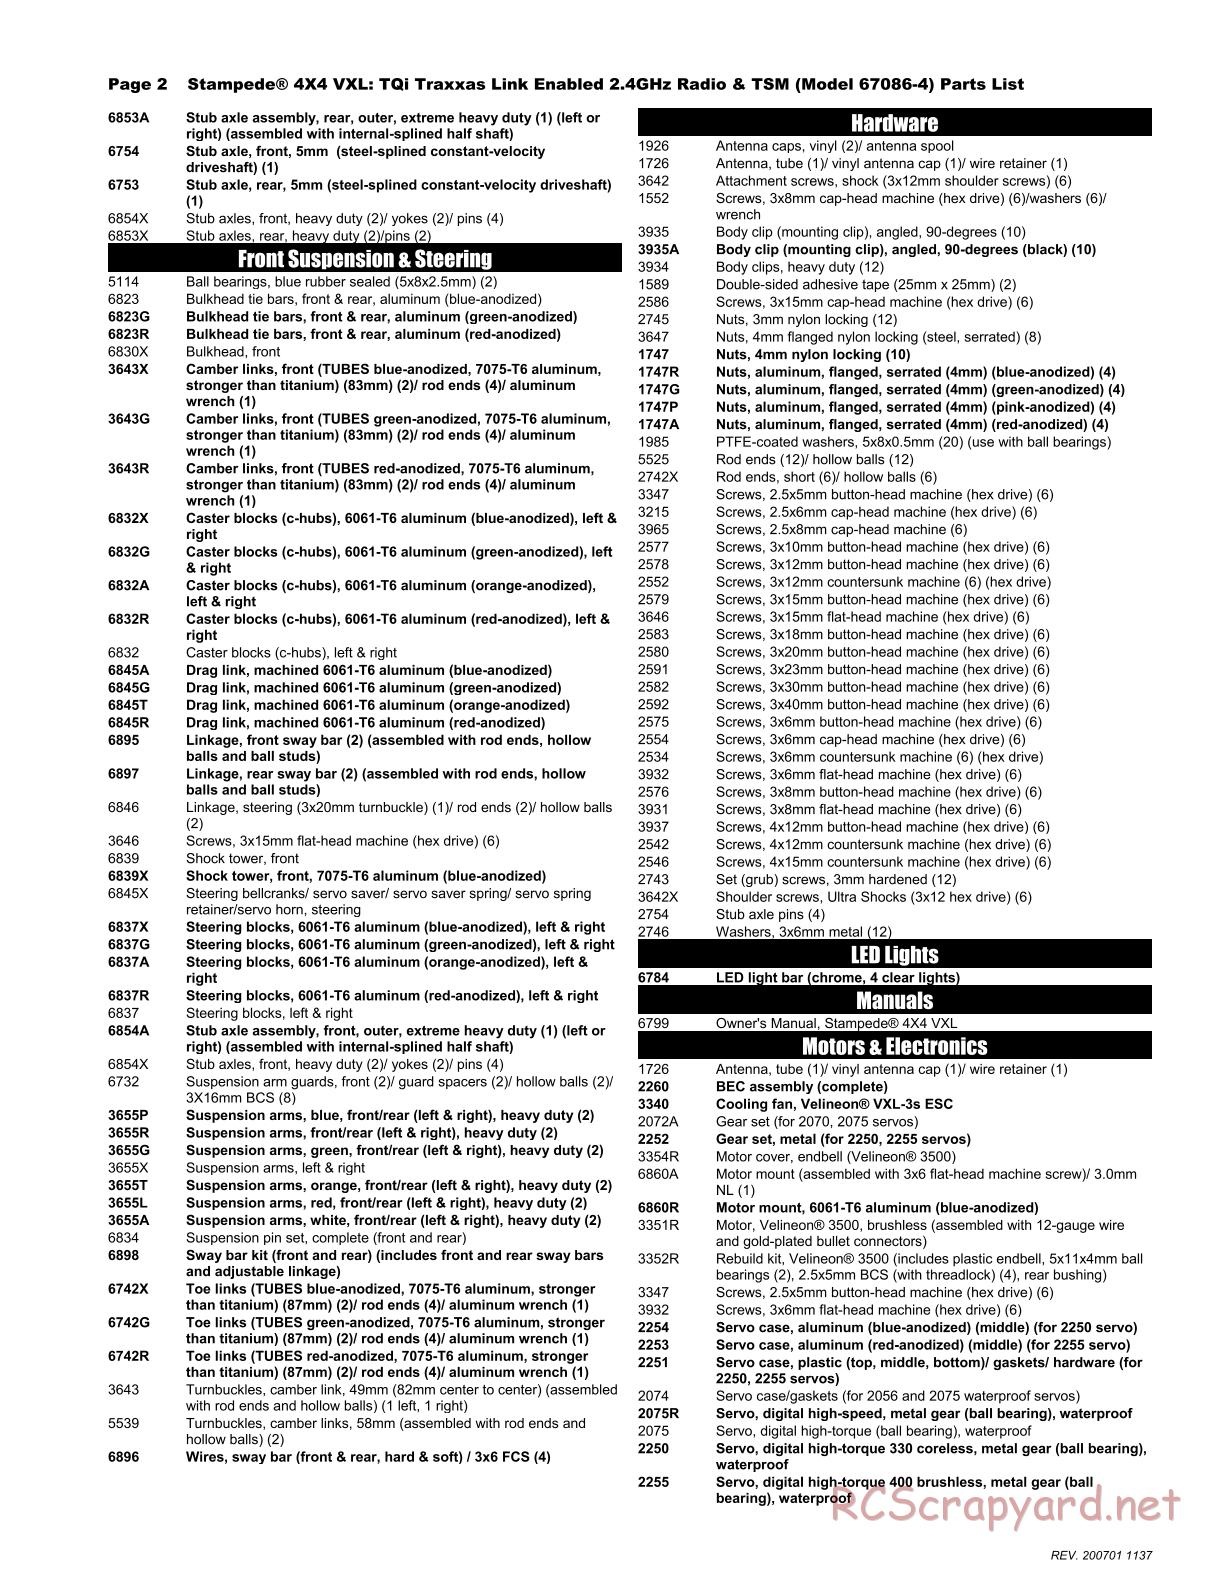 Traxxas - Stampede 4x4 VXL TSM - Parts List - Page 2